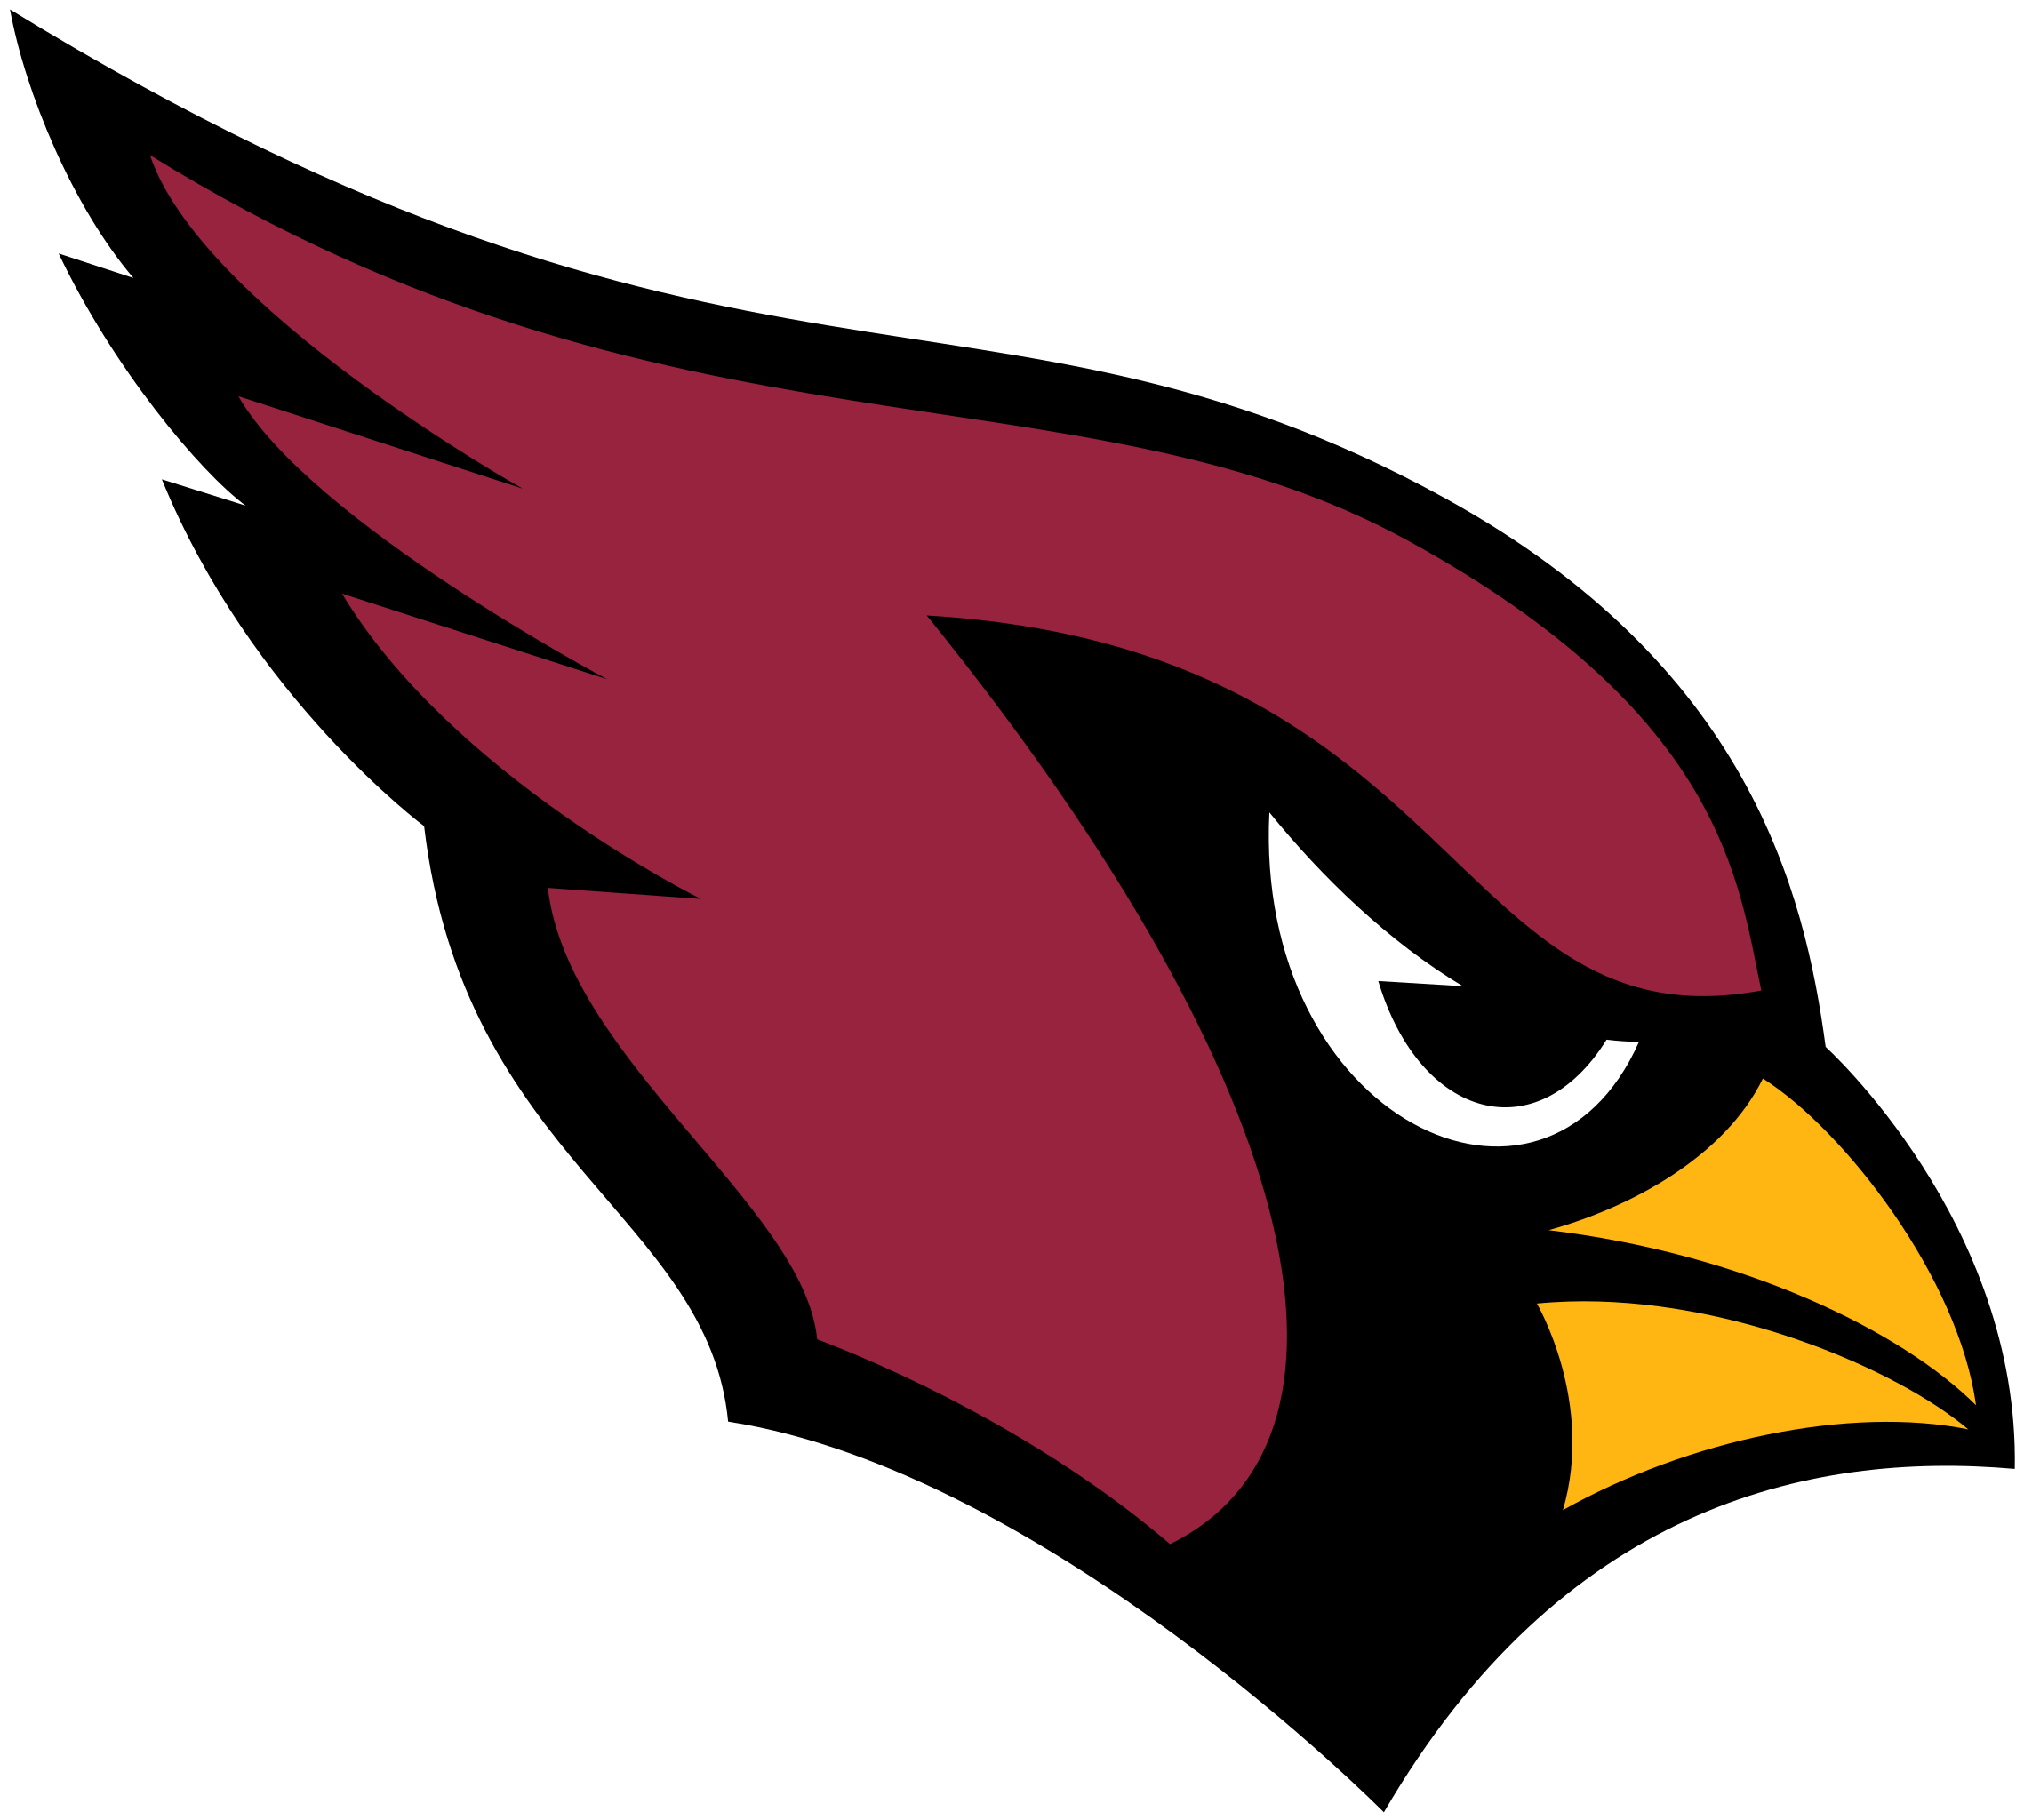 2023 St. Louis Cardinals season - Wikipedia